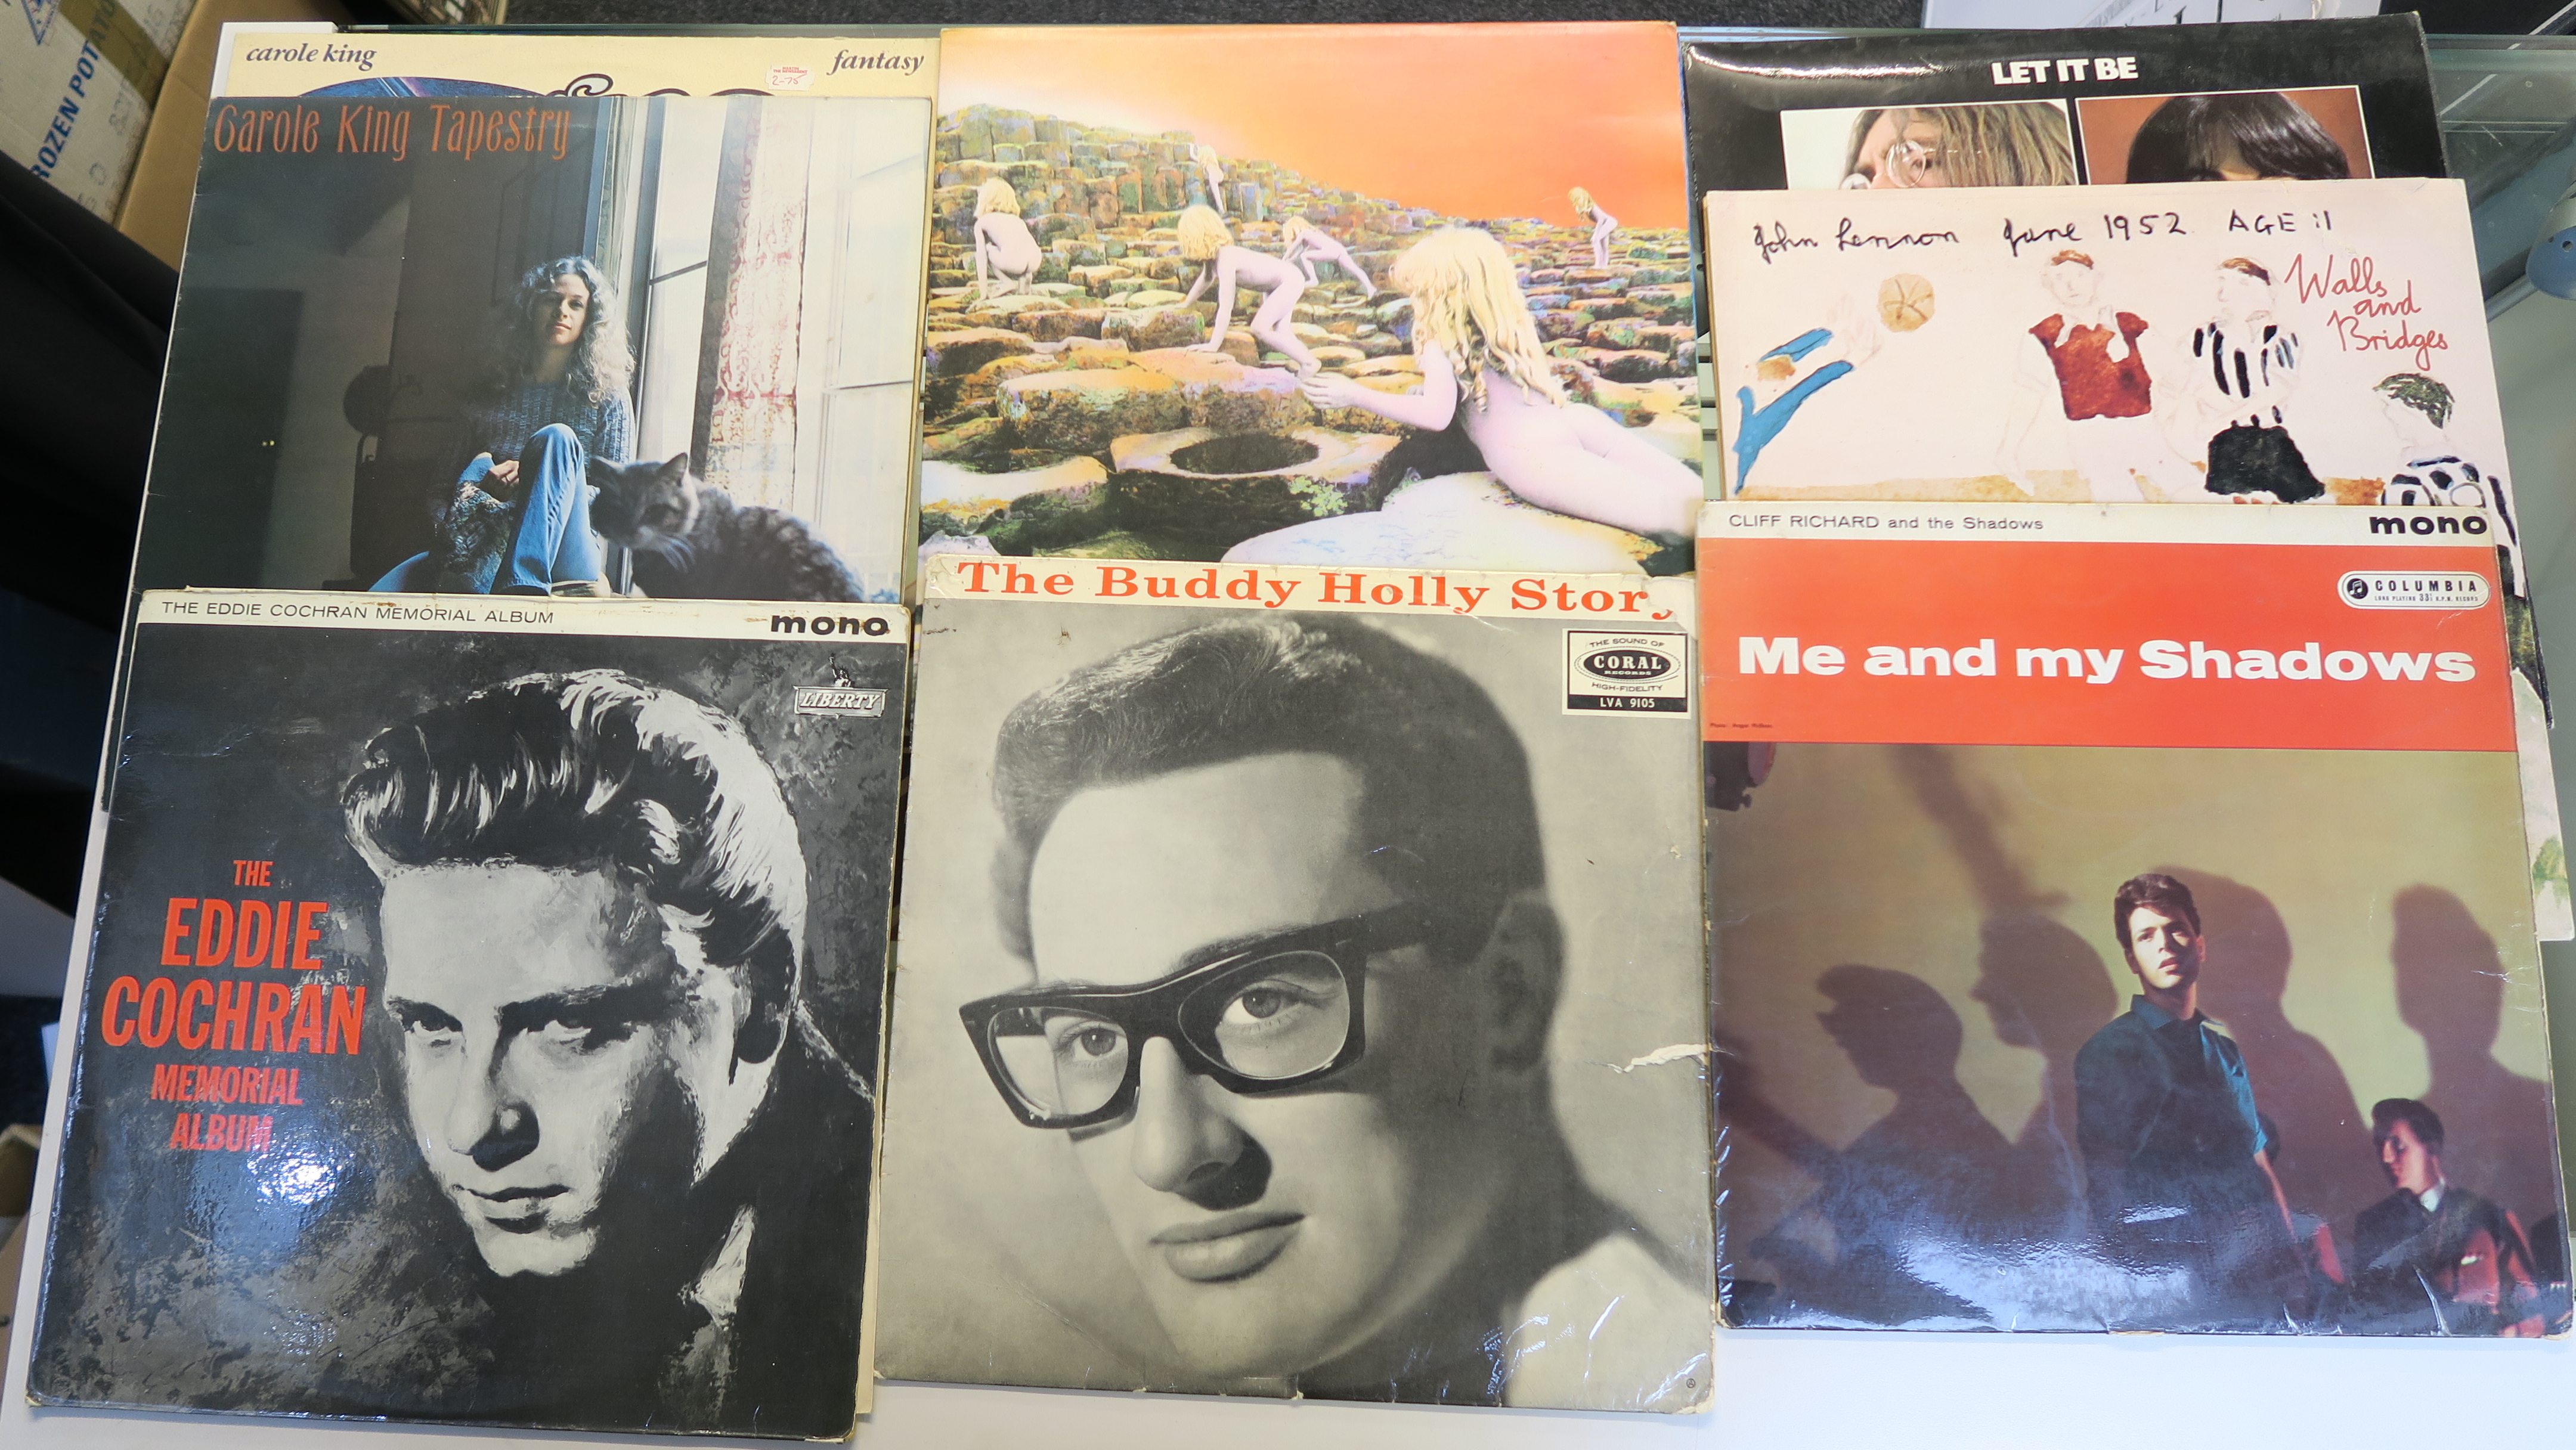 A Collection of vinyl LP albums & EPs including The Eddie Cochran Memorial album, Mono LBY 1127, - Image 2 of 2